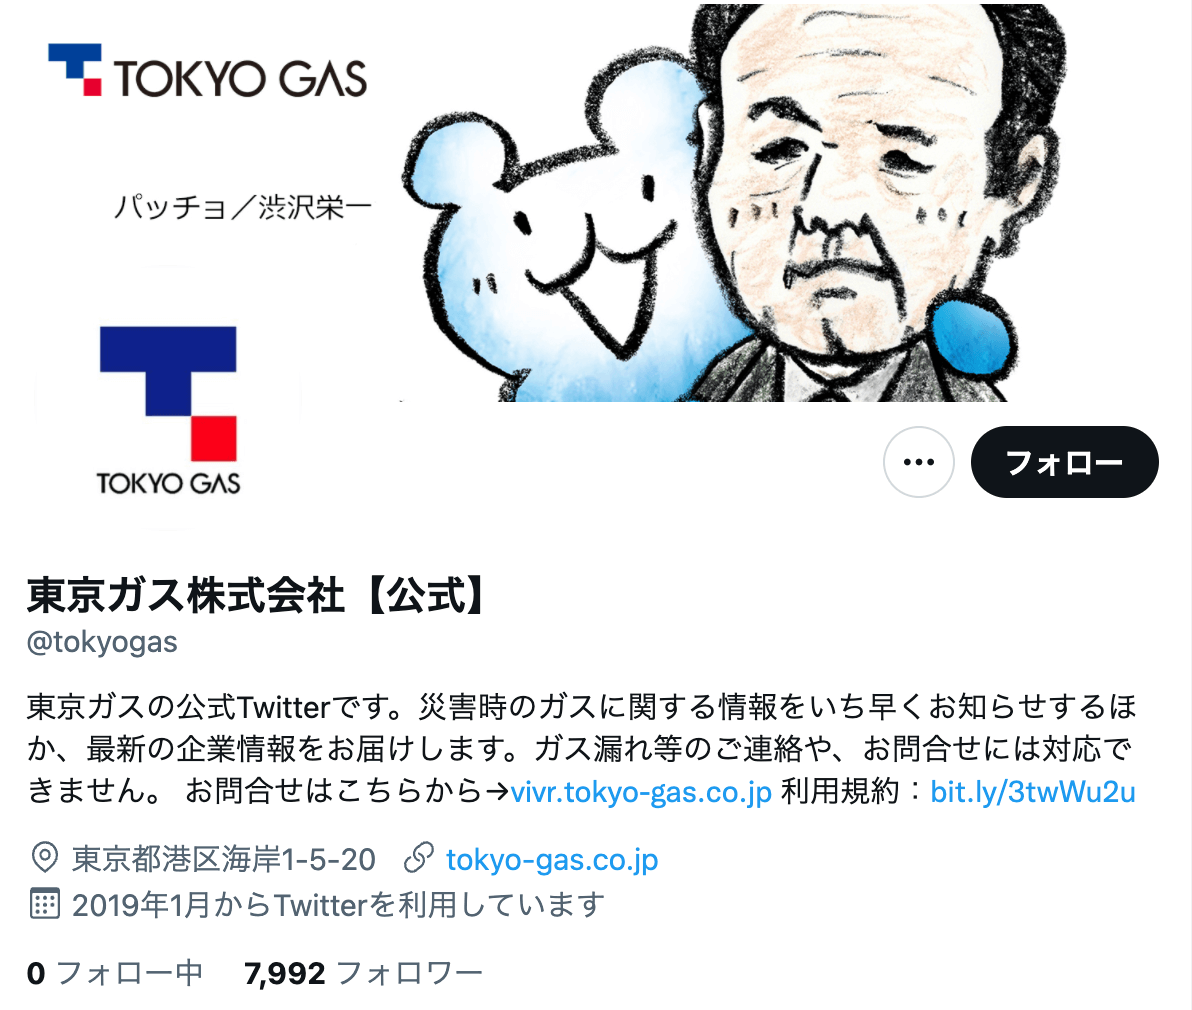 energie-company-Twitter3